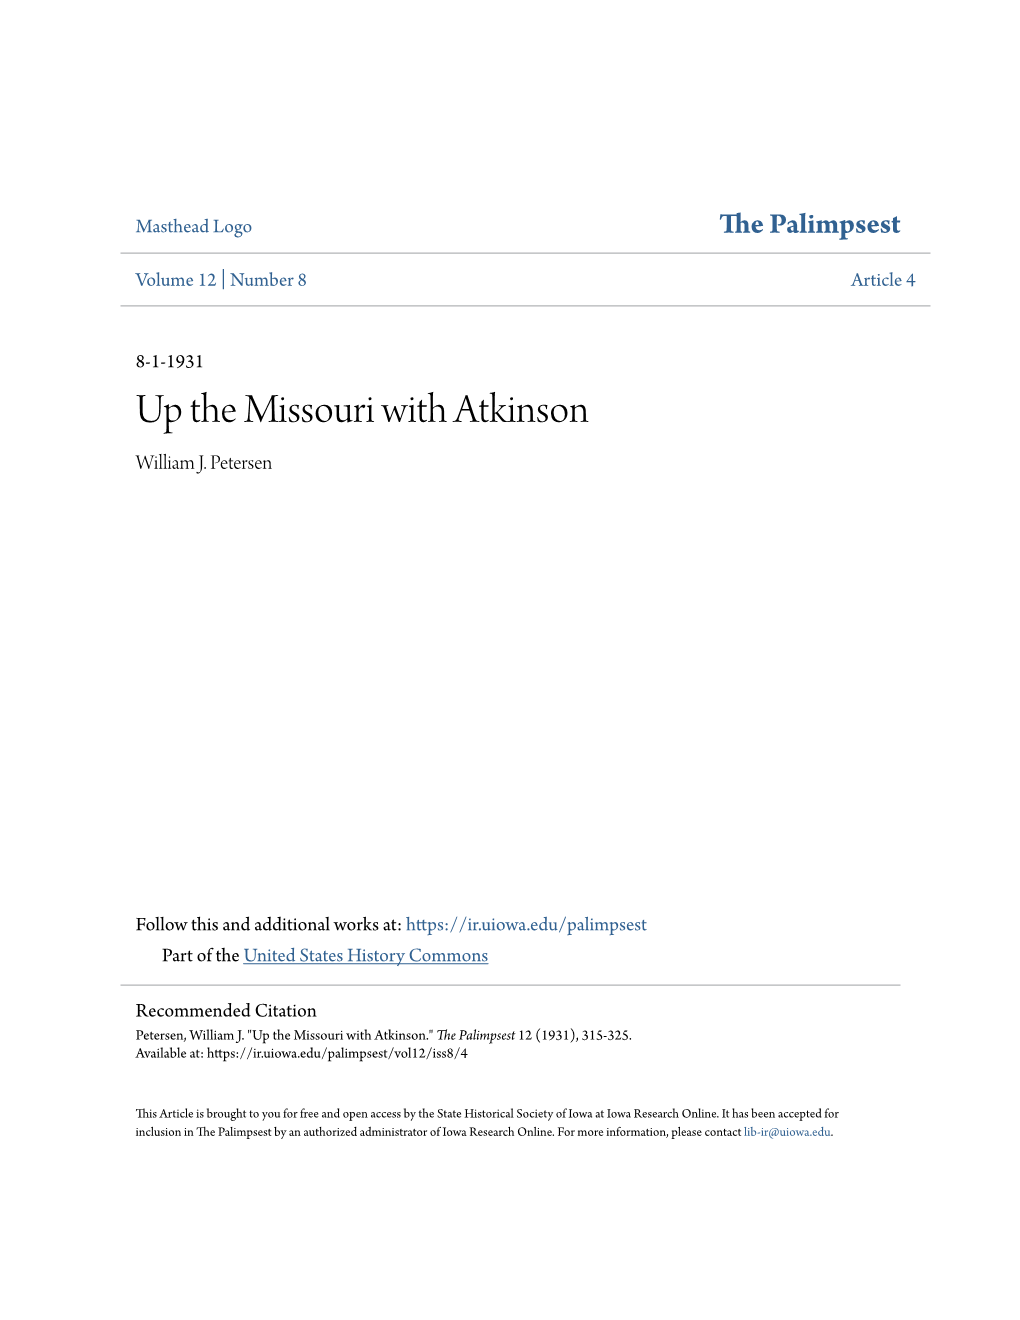 Up the Missouri with Atkinson William J